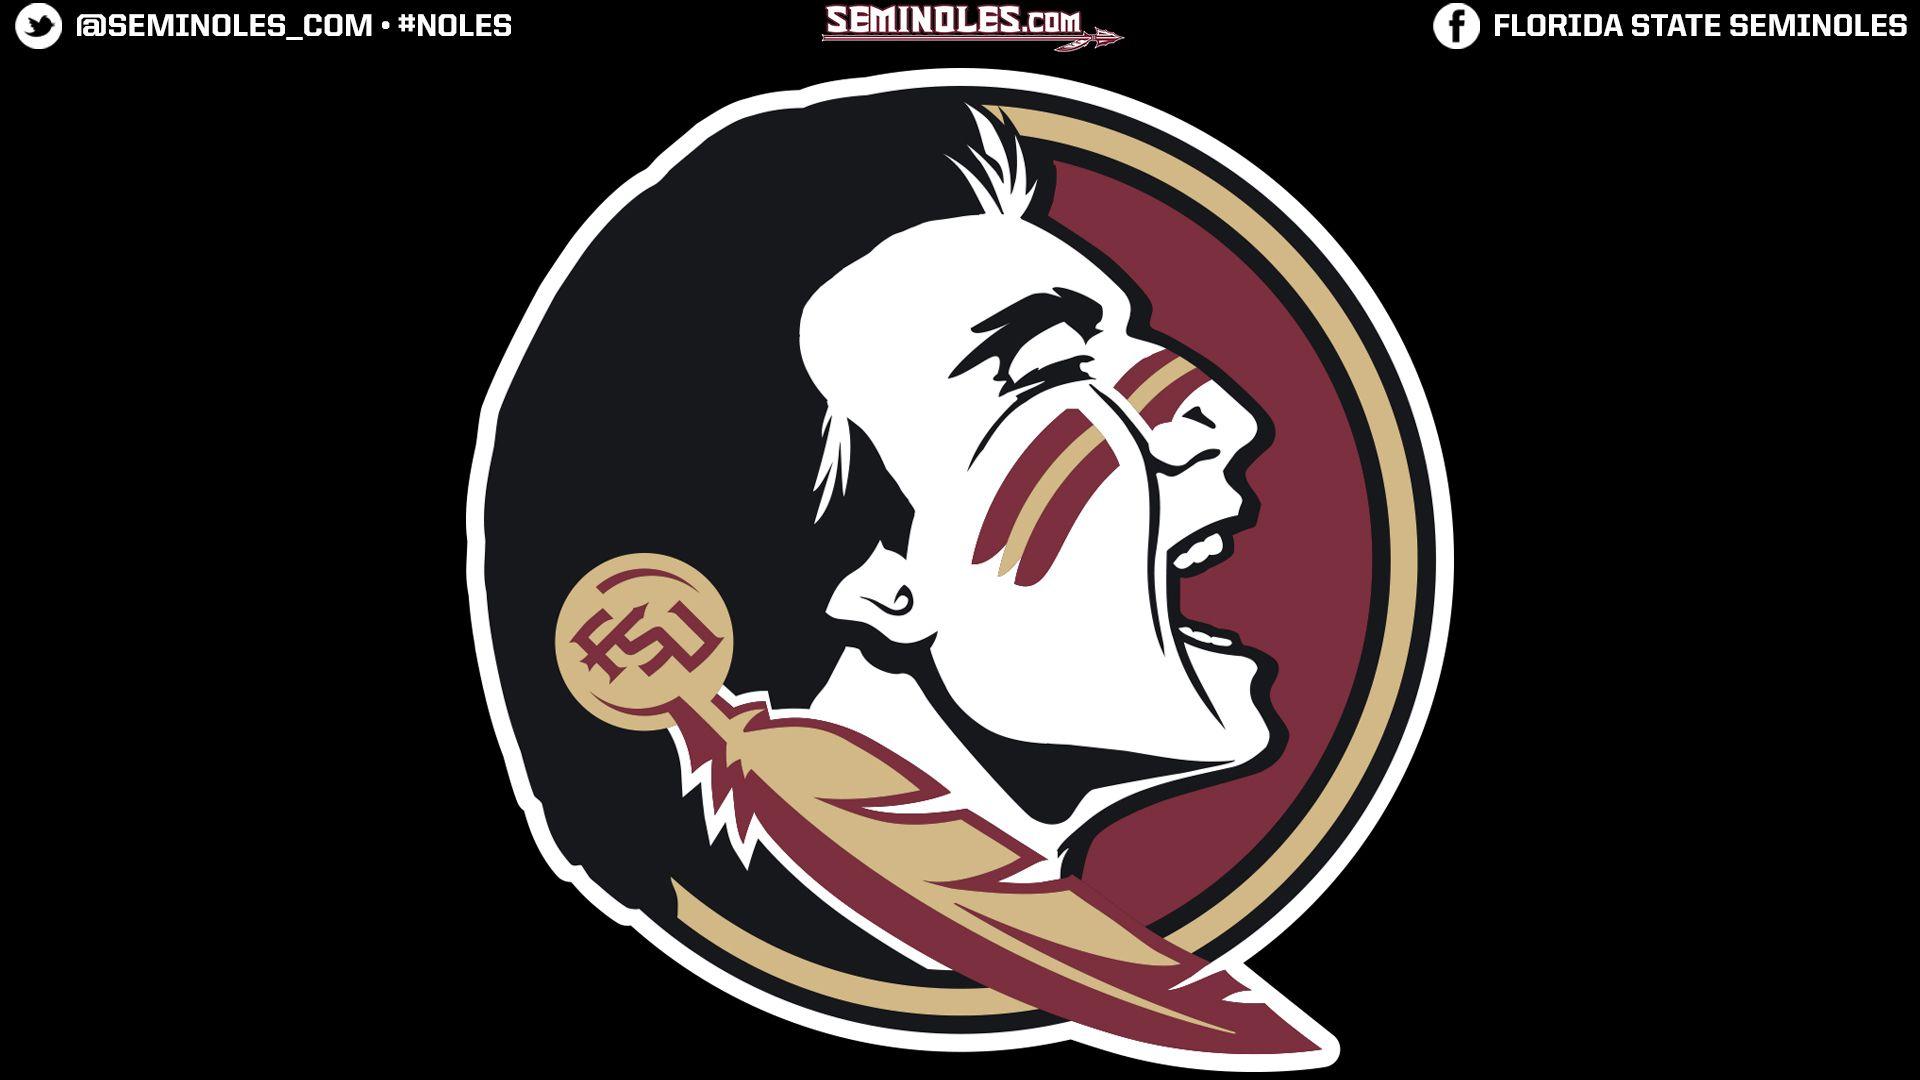 Florida State Seminoles Logo - Seminoles.com Desktop Wallpaper